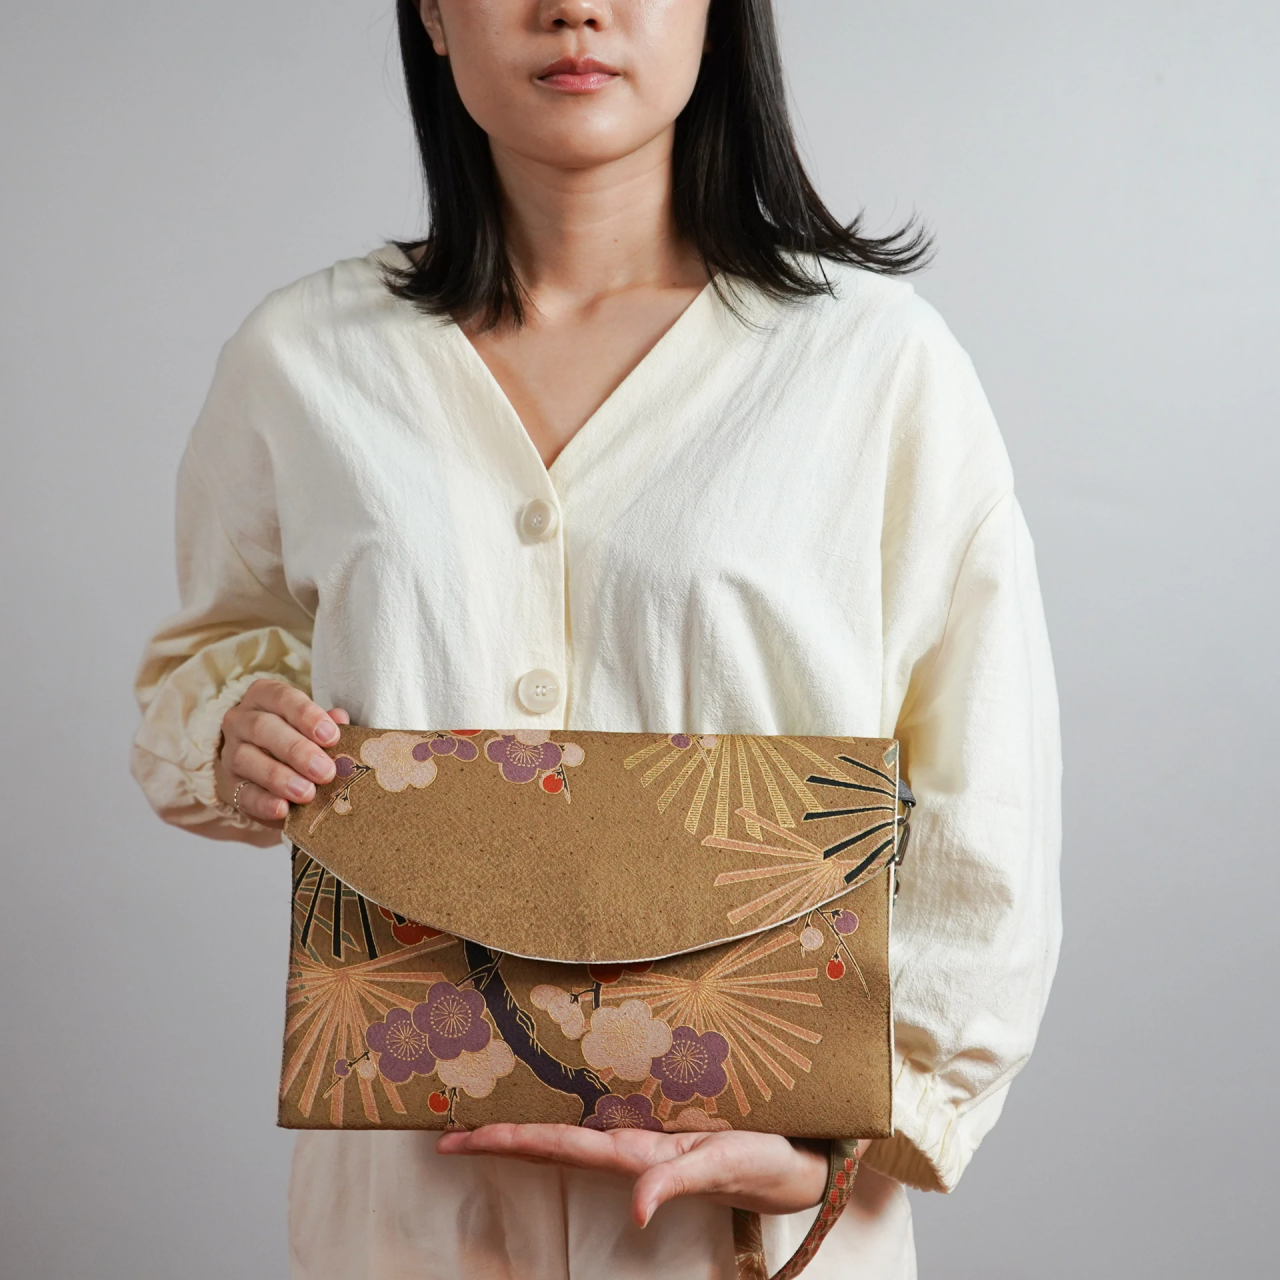 Momo Wristlet Clutch Bag from the Kimono Collection. – Biji Biji Ethical Fashion pic